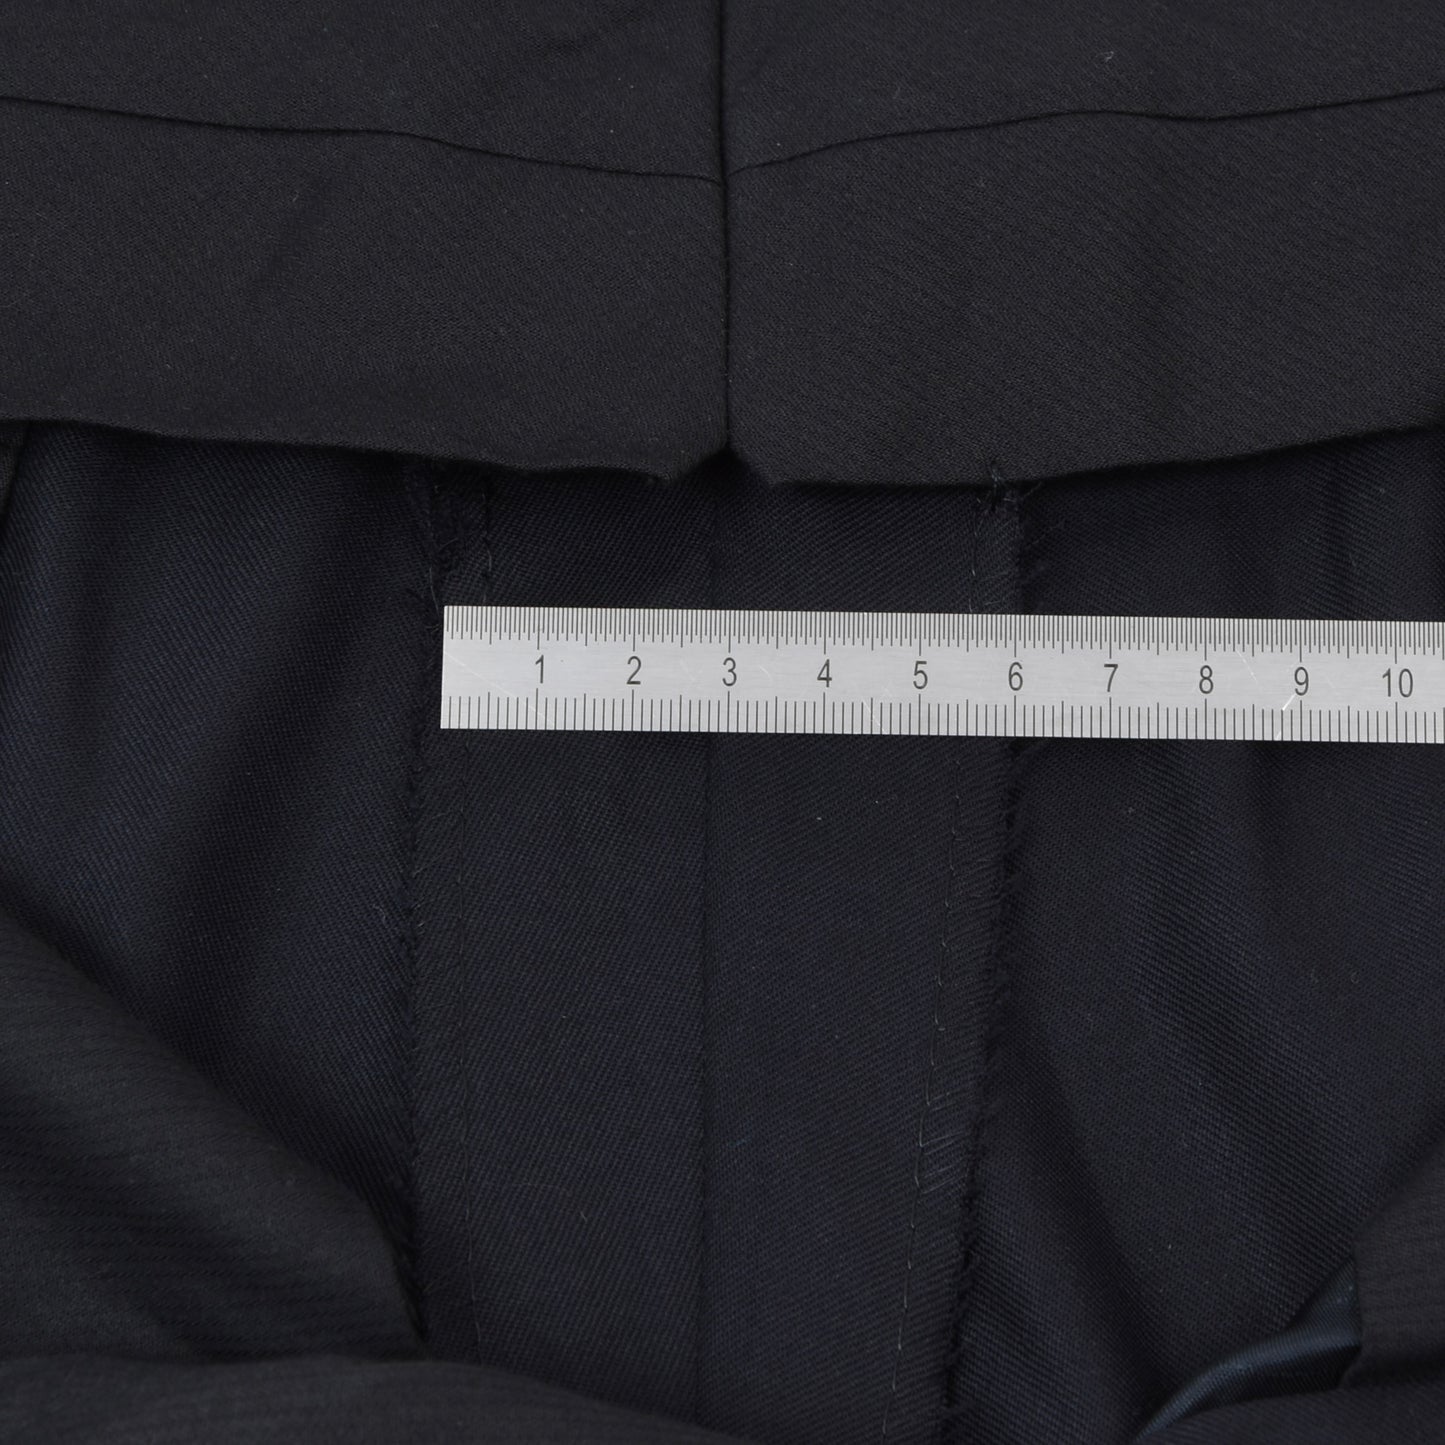 Corneliani 17.75 Microns Wool Suit Size 56 - Navy Blue